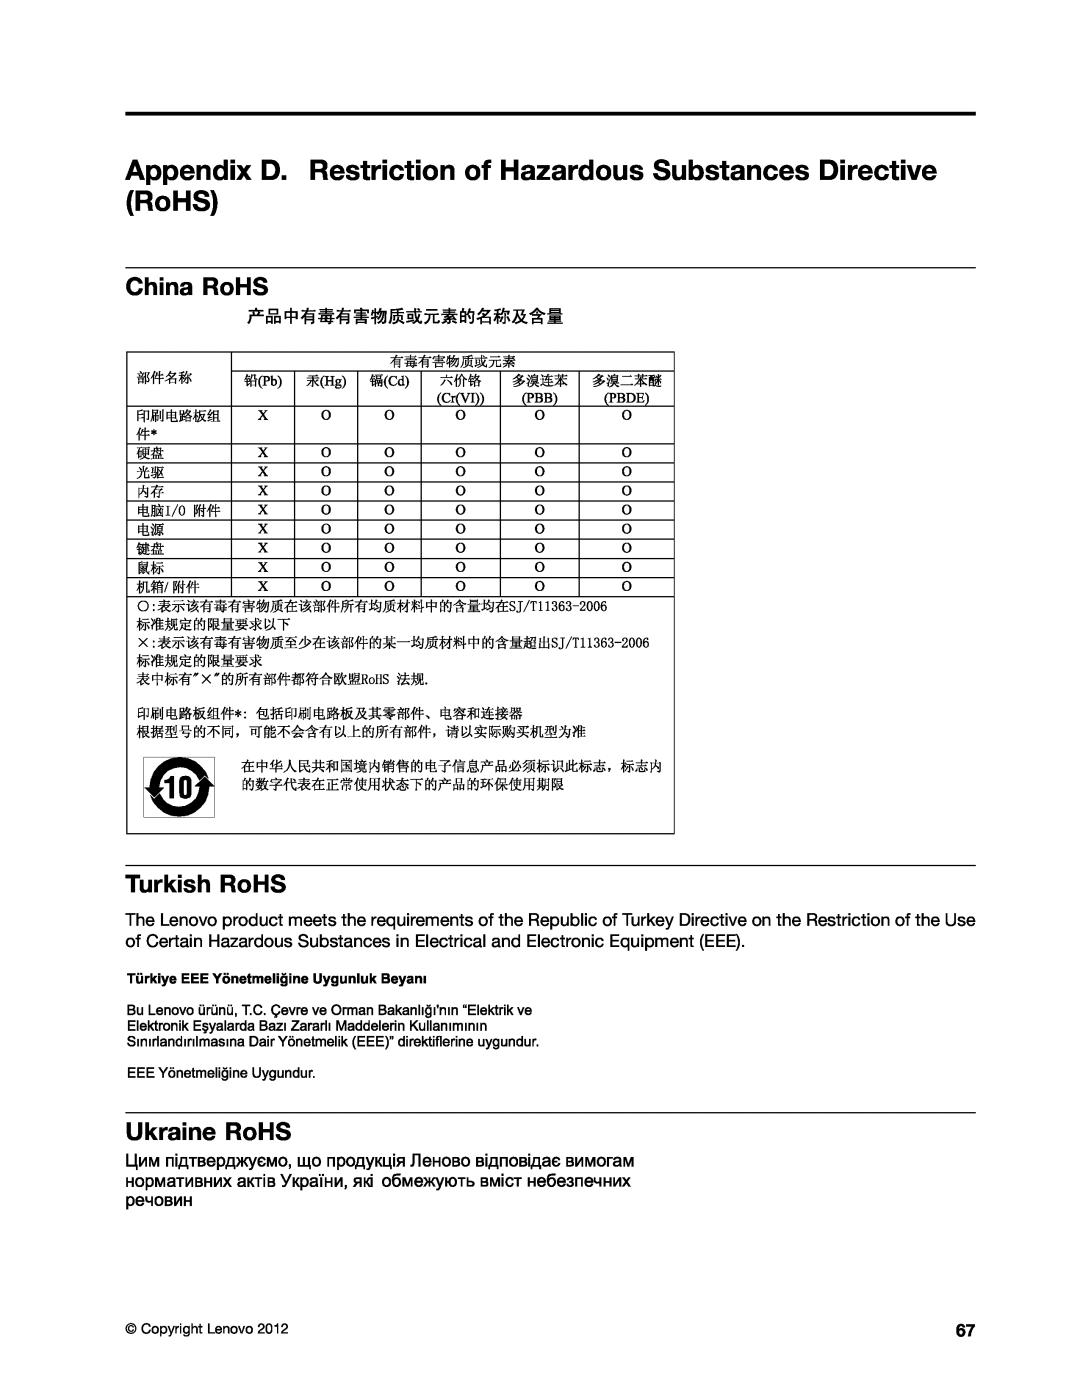 Lenovo 36795HU manual Appendix D. Restriction of Hazardous Substances Directive RoHS, China RoHS Turkish RoHS, Ukraine RoHS 